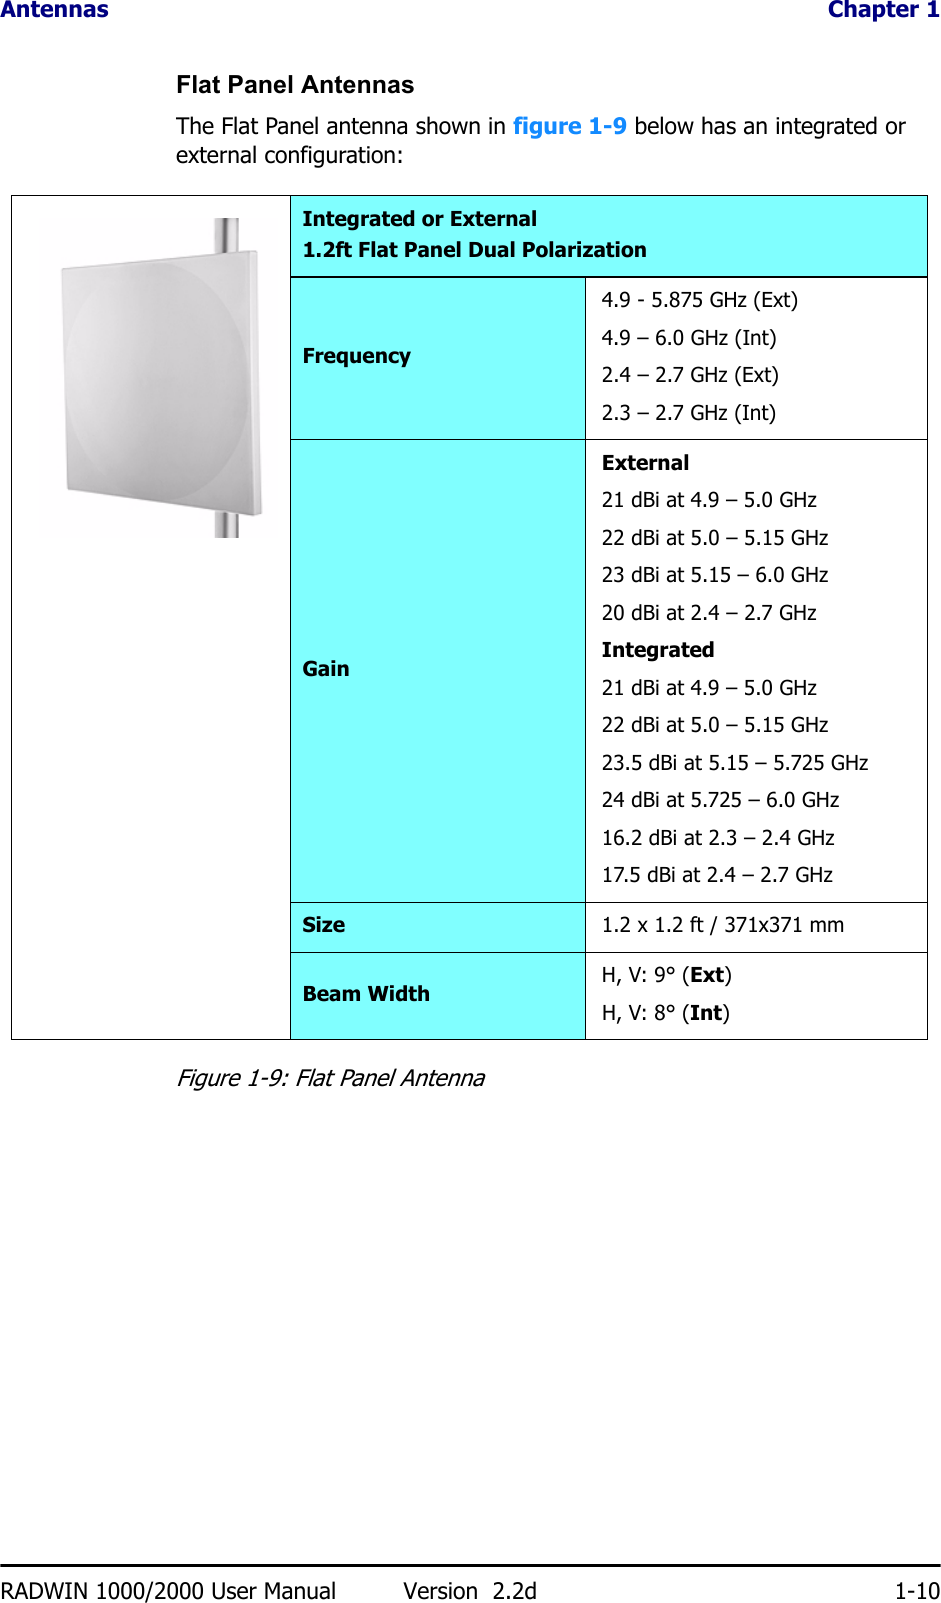 Antennas  Chapter 1RADWIN 1000/2000 User Manual Version  2.2d 1-10Flat Panel AntennasThe Flat Panel antenna shown in figure 1-9 below has an integrated or external configuration:Figure 1-9: Flat Panel AntennaIntegrated or External1.2ft Flat Panel Dual PolarizationFrequency4.9 - 5.875 GHz (Ext)4.9 – 6.0 GHz (Int)2.4 – 2.7 GHz (Ext)2.3 – 2.7 GHz (Int)GainExternal21 dBi at 4.9 – 5.0 GHz 22 dBi at 5.0 – 5.15 GHz 23 dBi at 5.15 – 6.0 GHz20 dBi at 2.4 – 2.7 GHzIntegrated21 dBi at 4.9 – 5.0 GHz 22 dBi at 5.0 – 5.15 GHz 23.5 dBi at 5.15 – 5.725 GHz24 dBi at 5.725 – 6.0 GHz16.2 dBi at 2.3 – 2.4 GHz17.5 dBi at 2.4 – 2.7 GHzSize 1.2 x 1.2 ft / 371x371 mmBeam Width H, V: 9° (Ext)H, V: 8° (Int)